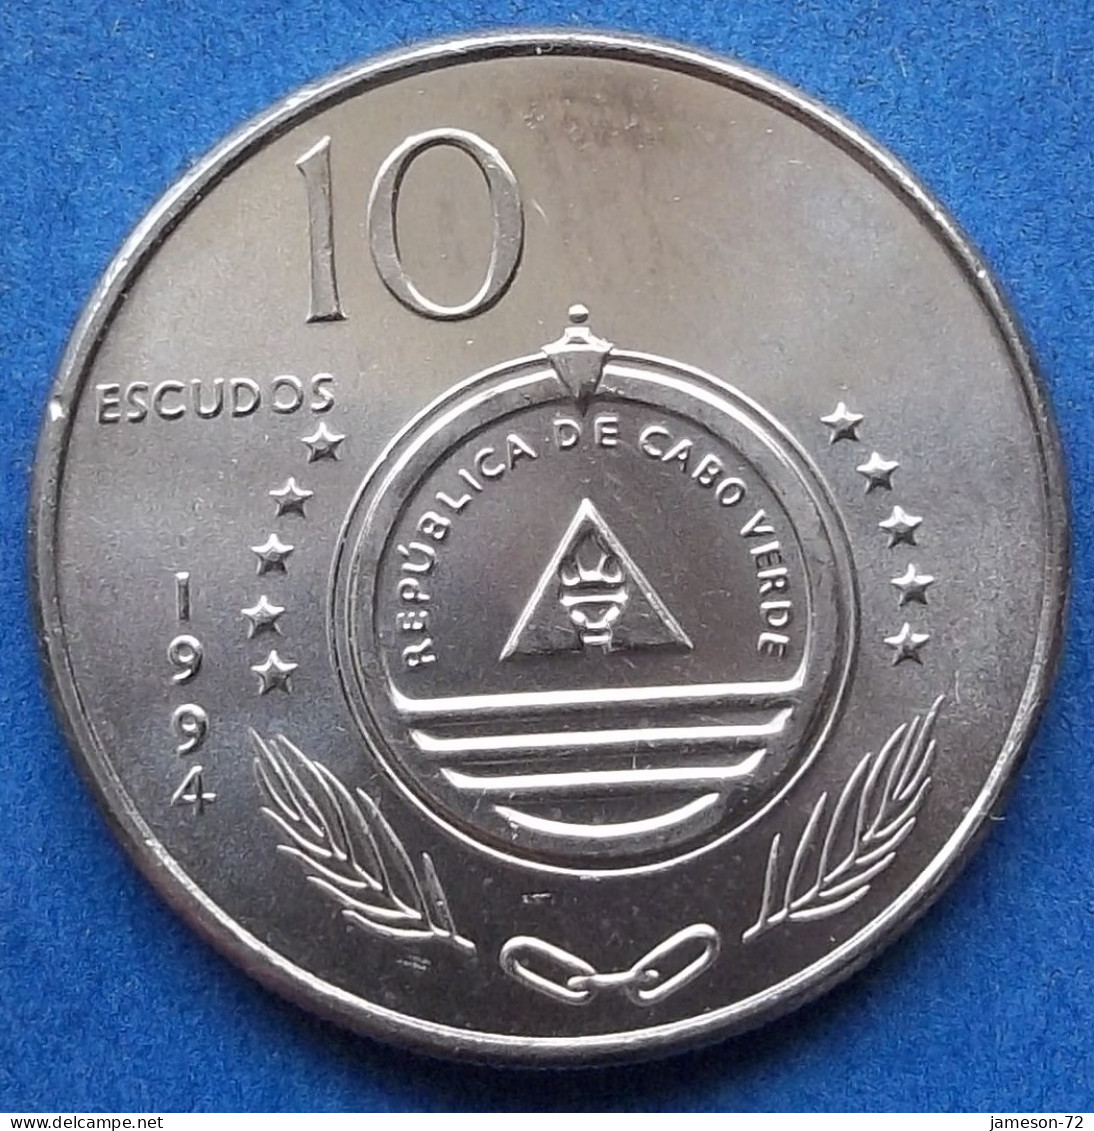 CAPE VERDE - 10 Escudos 1994 "Lingua De Vaca" KM# 32 Independent Republic (1975) - Edelweiss Coins - Cape Verde